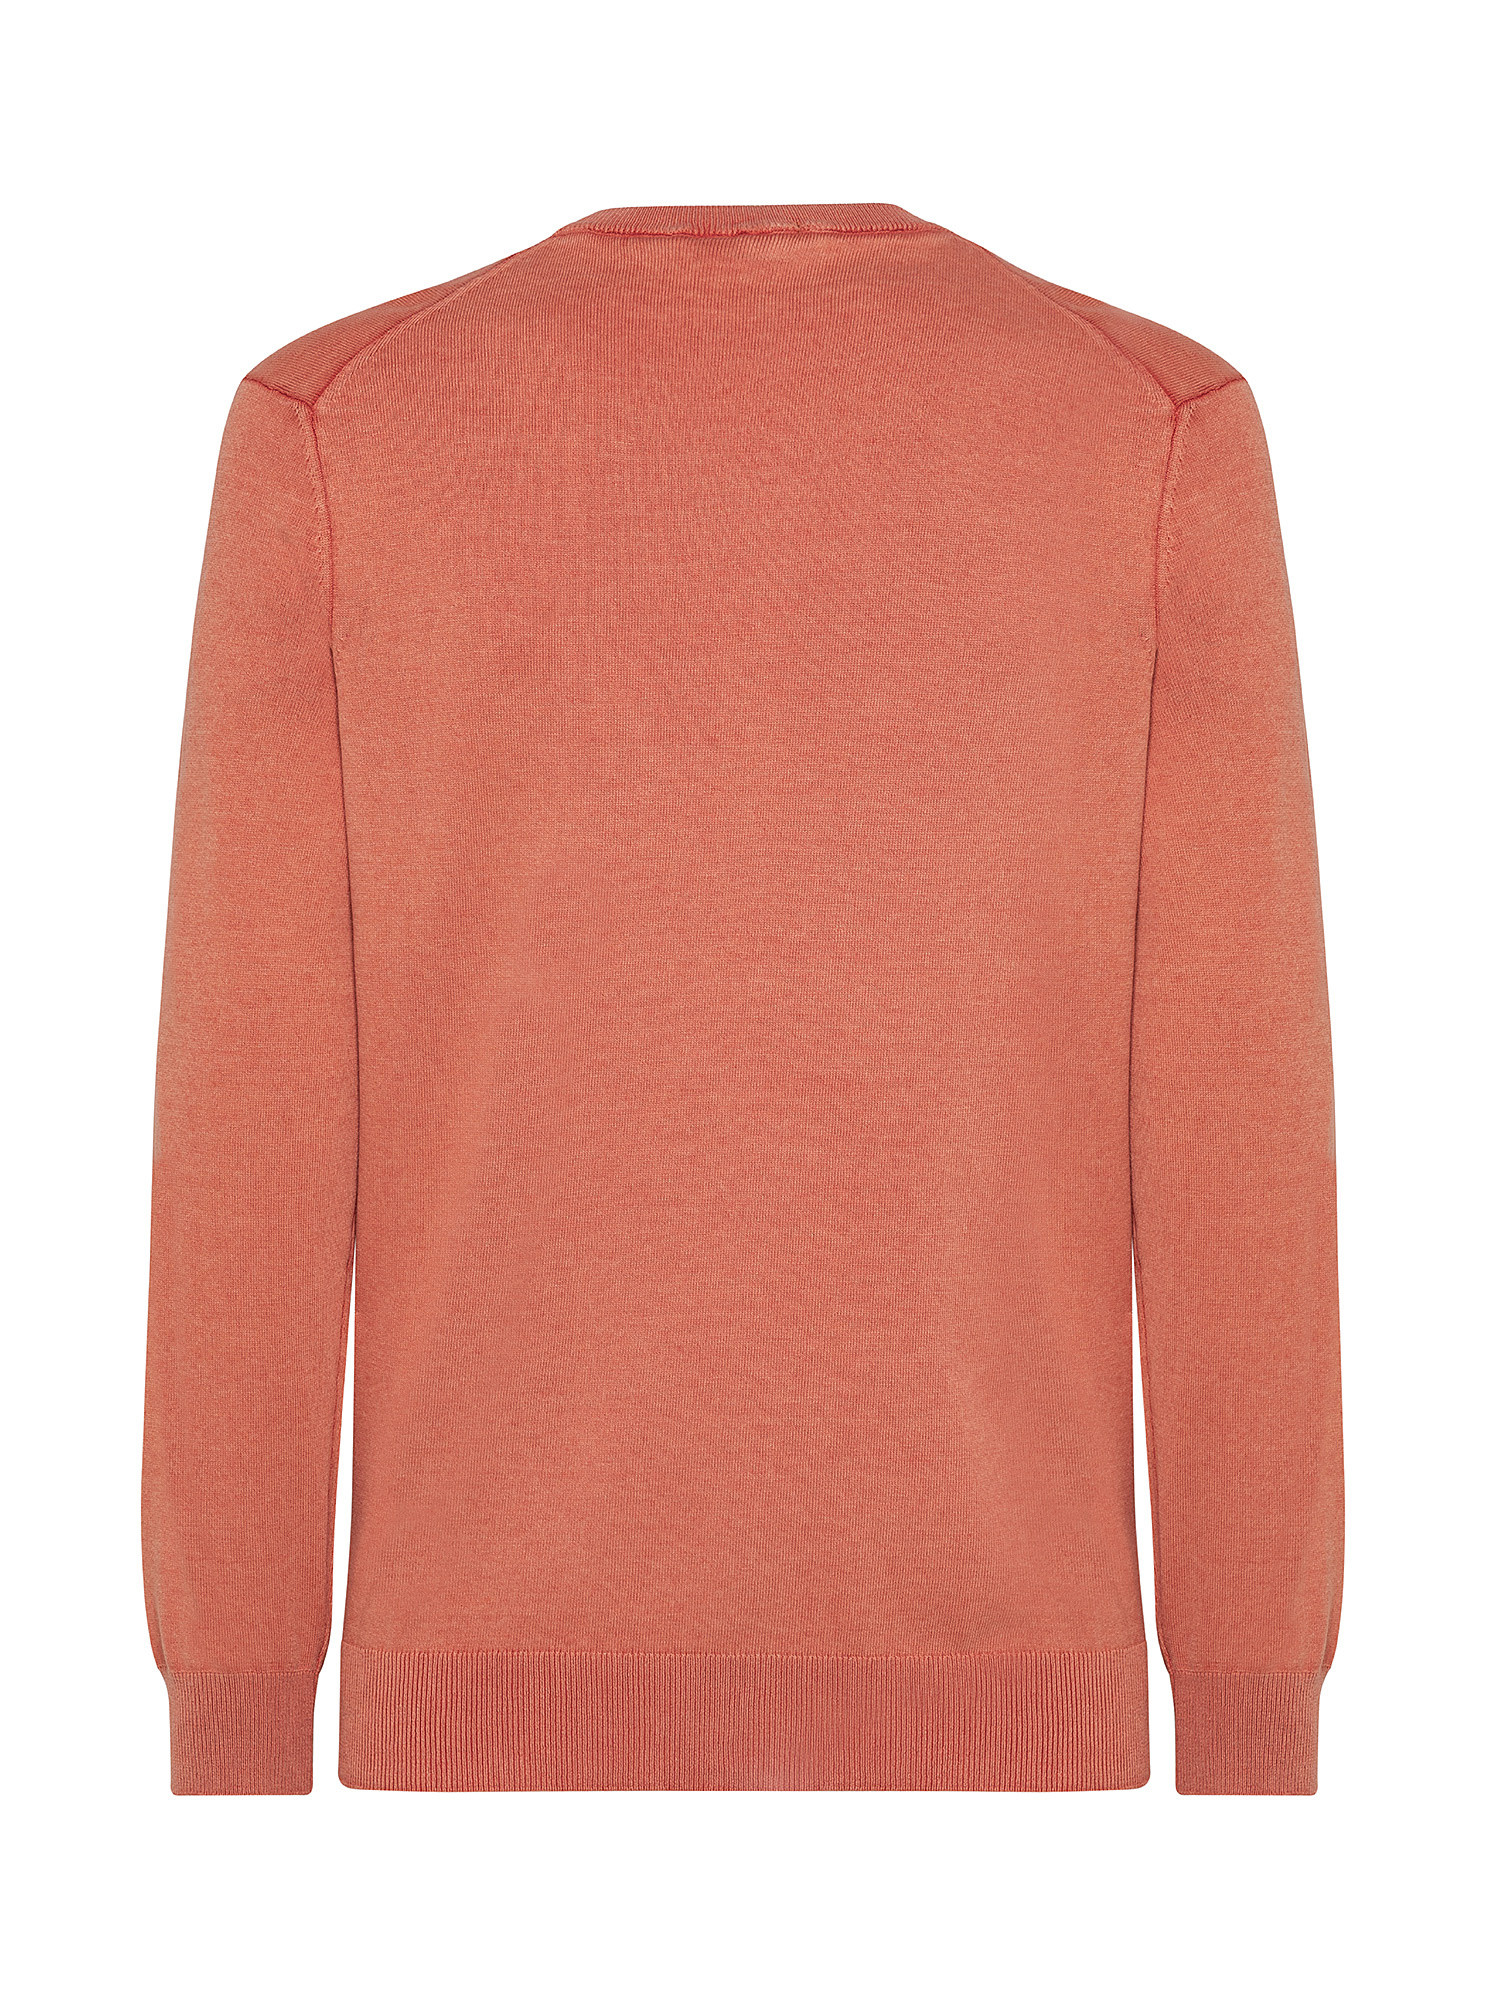 EK + Men's Lightweight Sweater, Orange, large image number 1